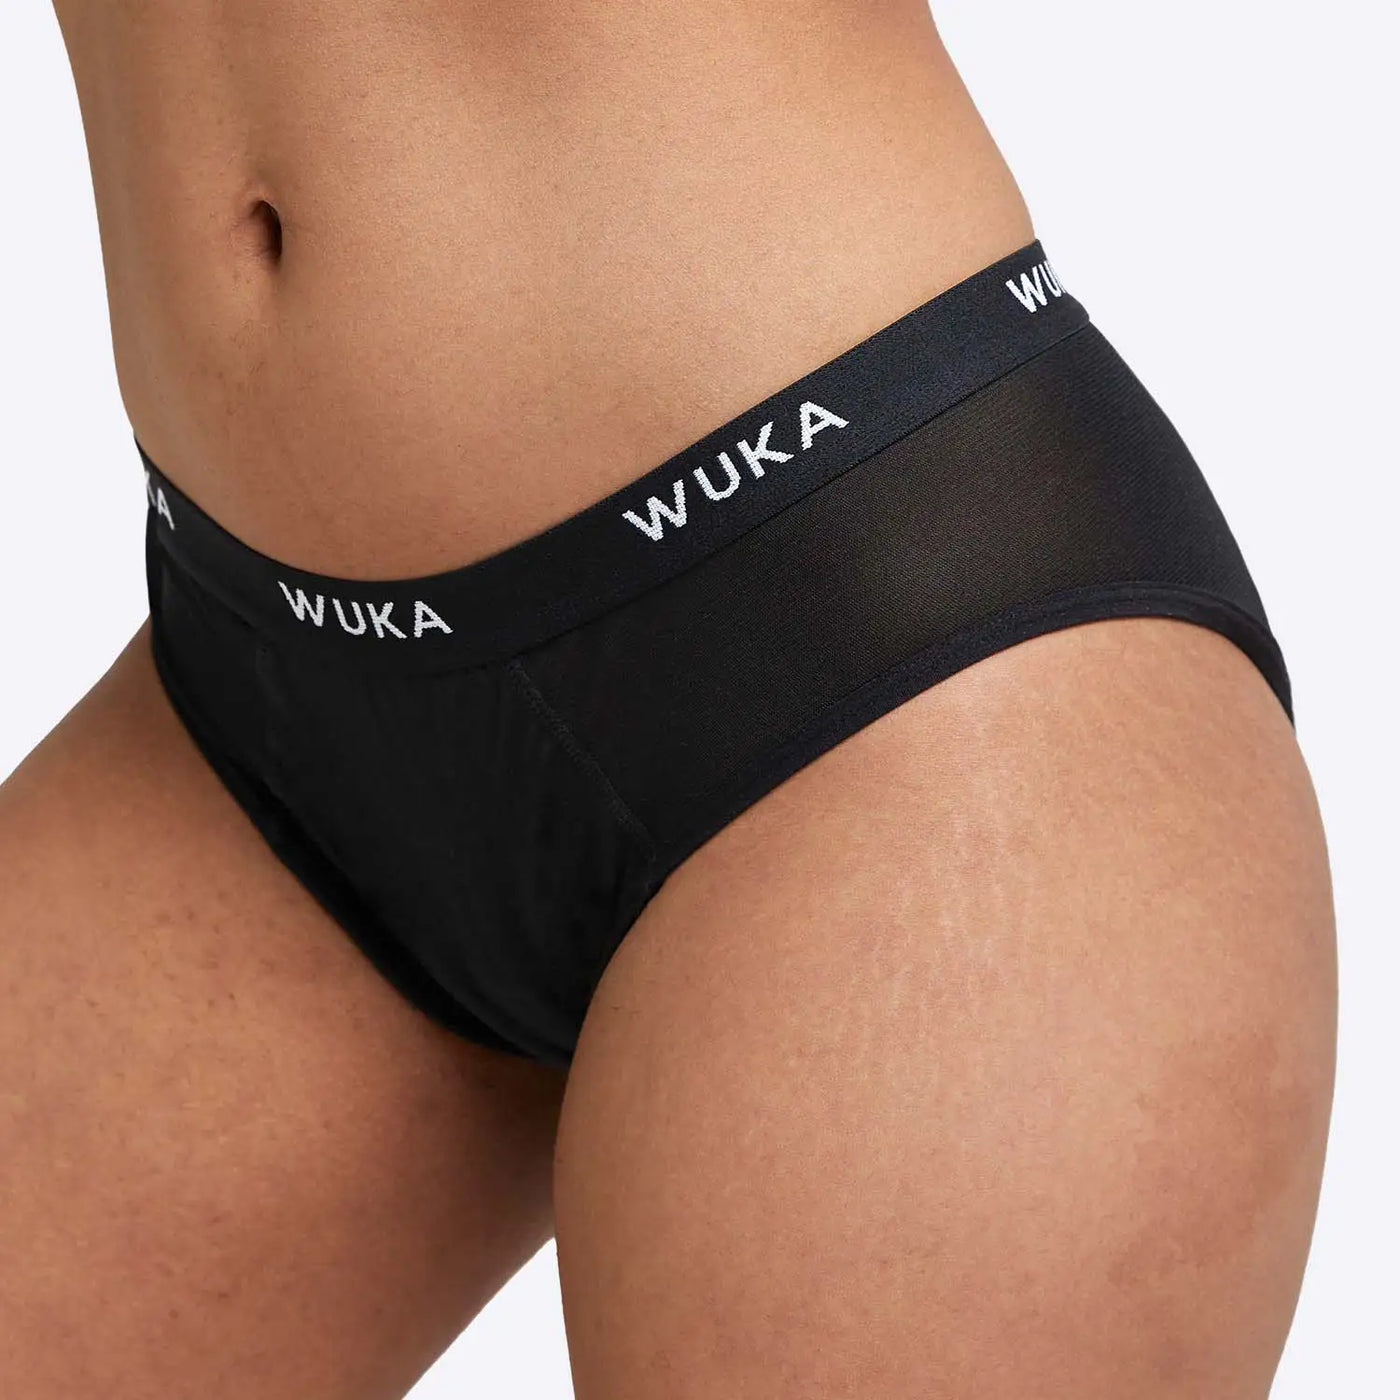 Super Heavy Flow Period Pants, WUKA Ultimate High Waist